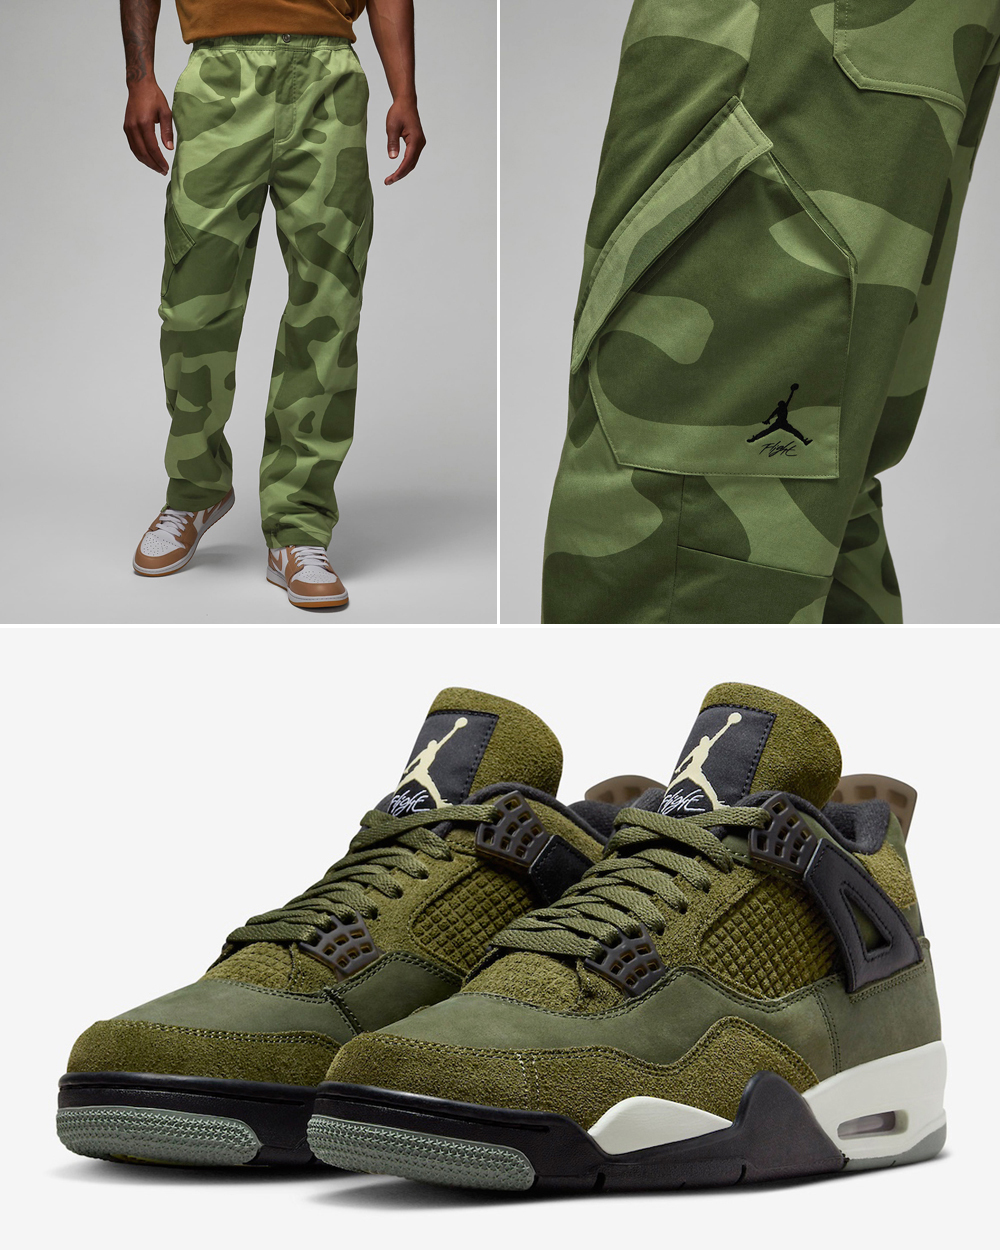 Air-Jordan-4-Craft-Olive-Pants